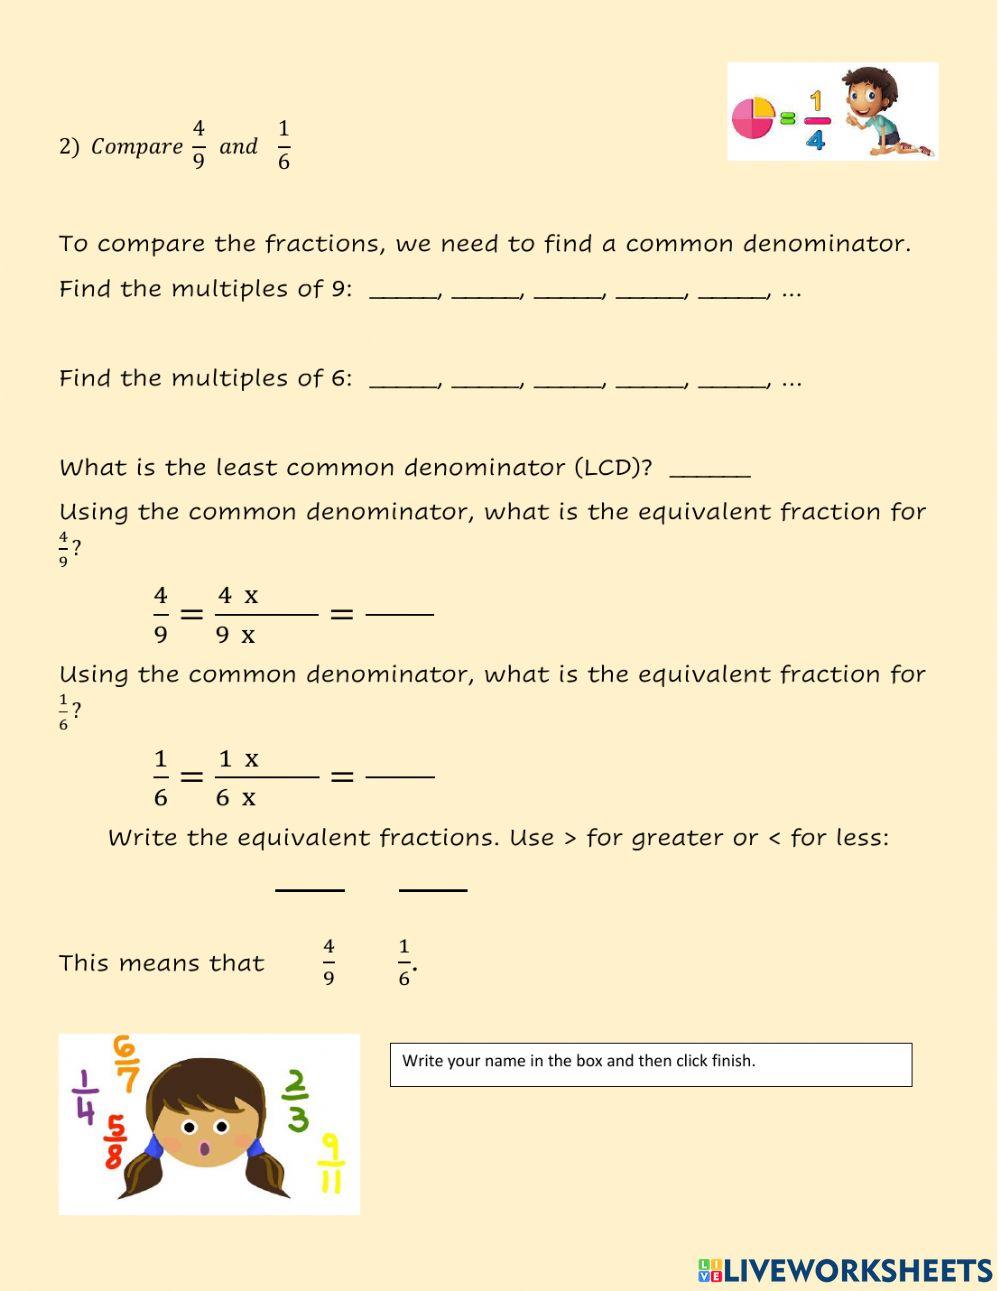 Comparing Fractions Retake Quiz